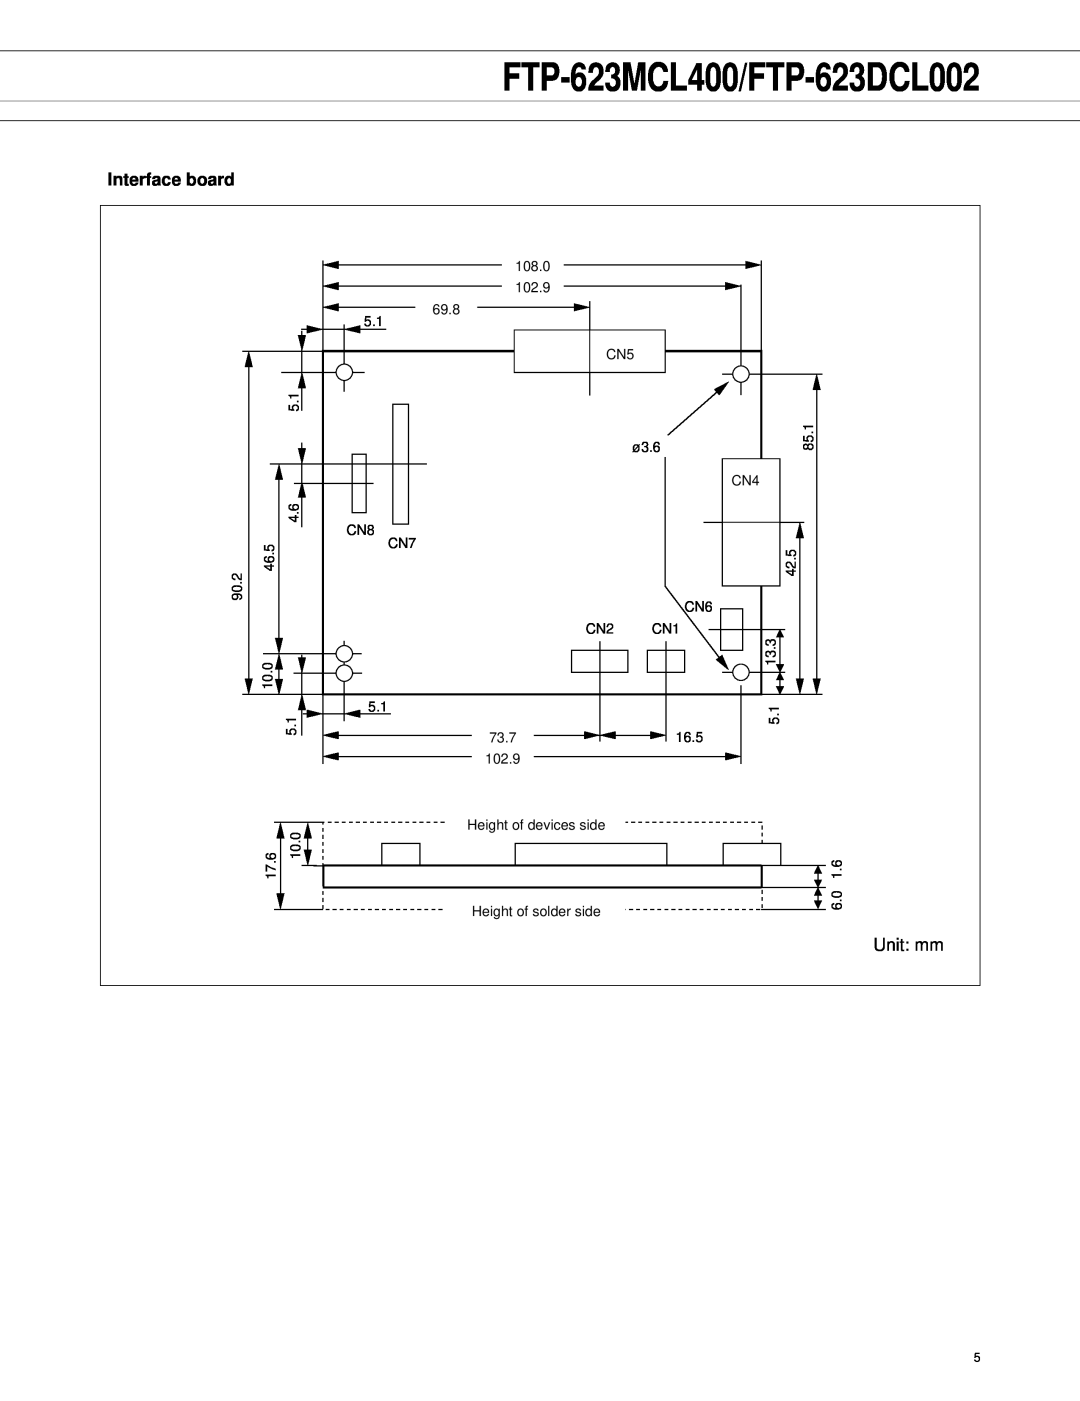 Fujitsu manual Interface board, FTP-623MCL400/FTP-623DCL002 